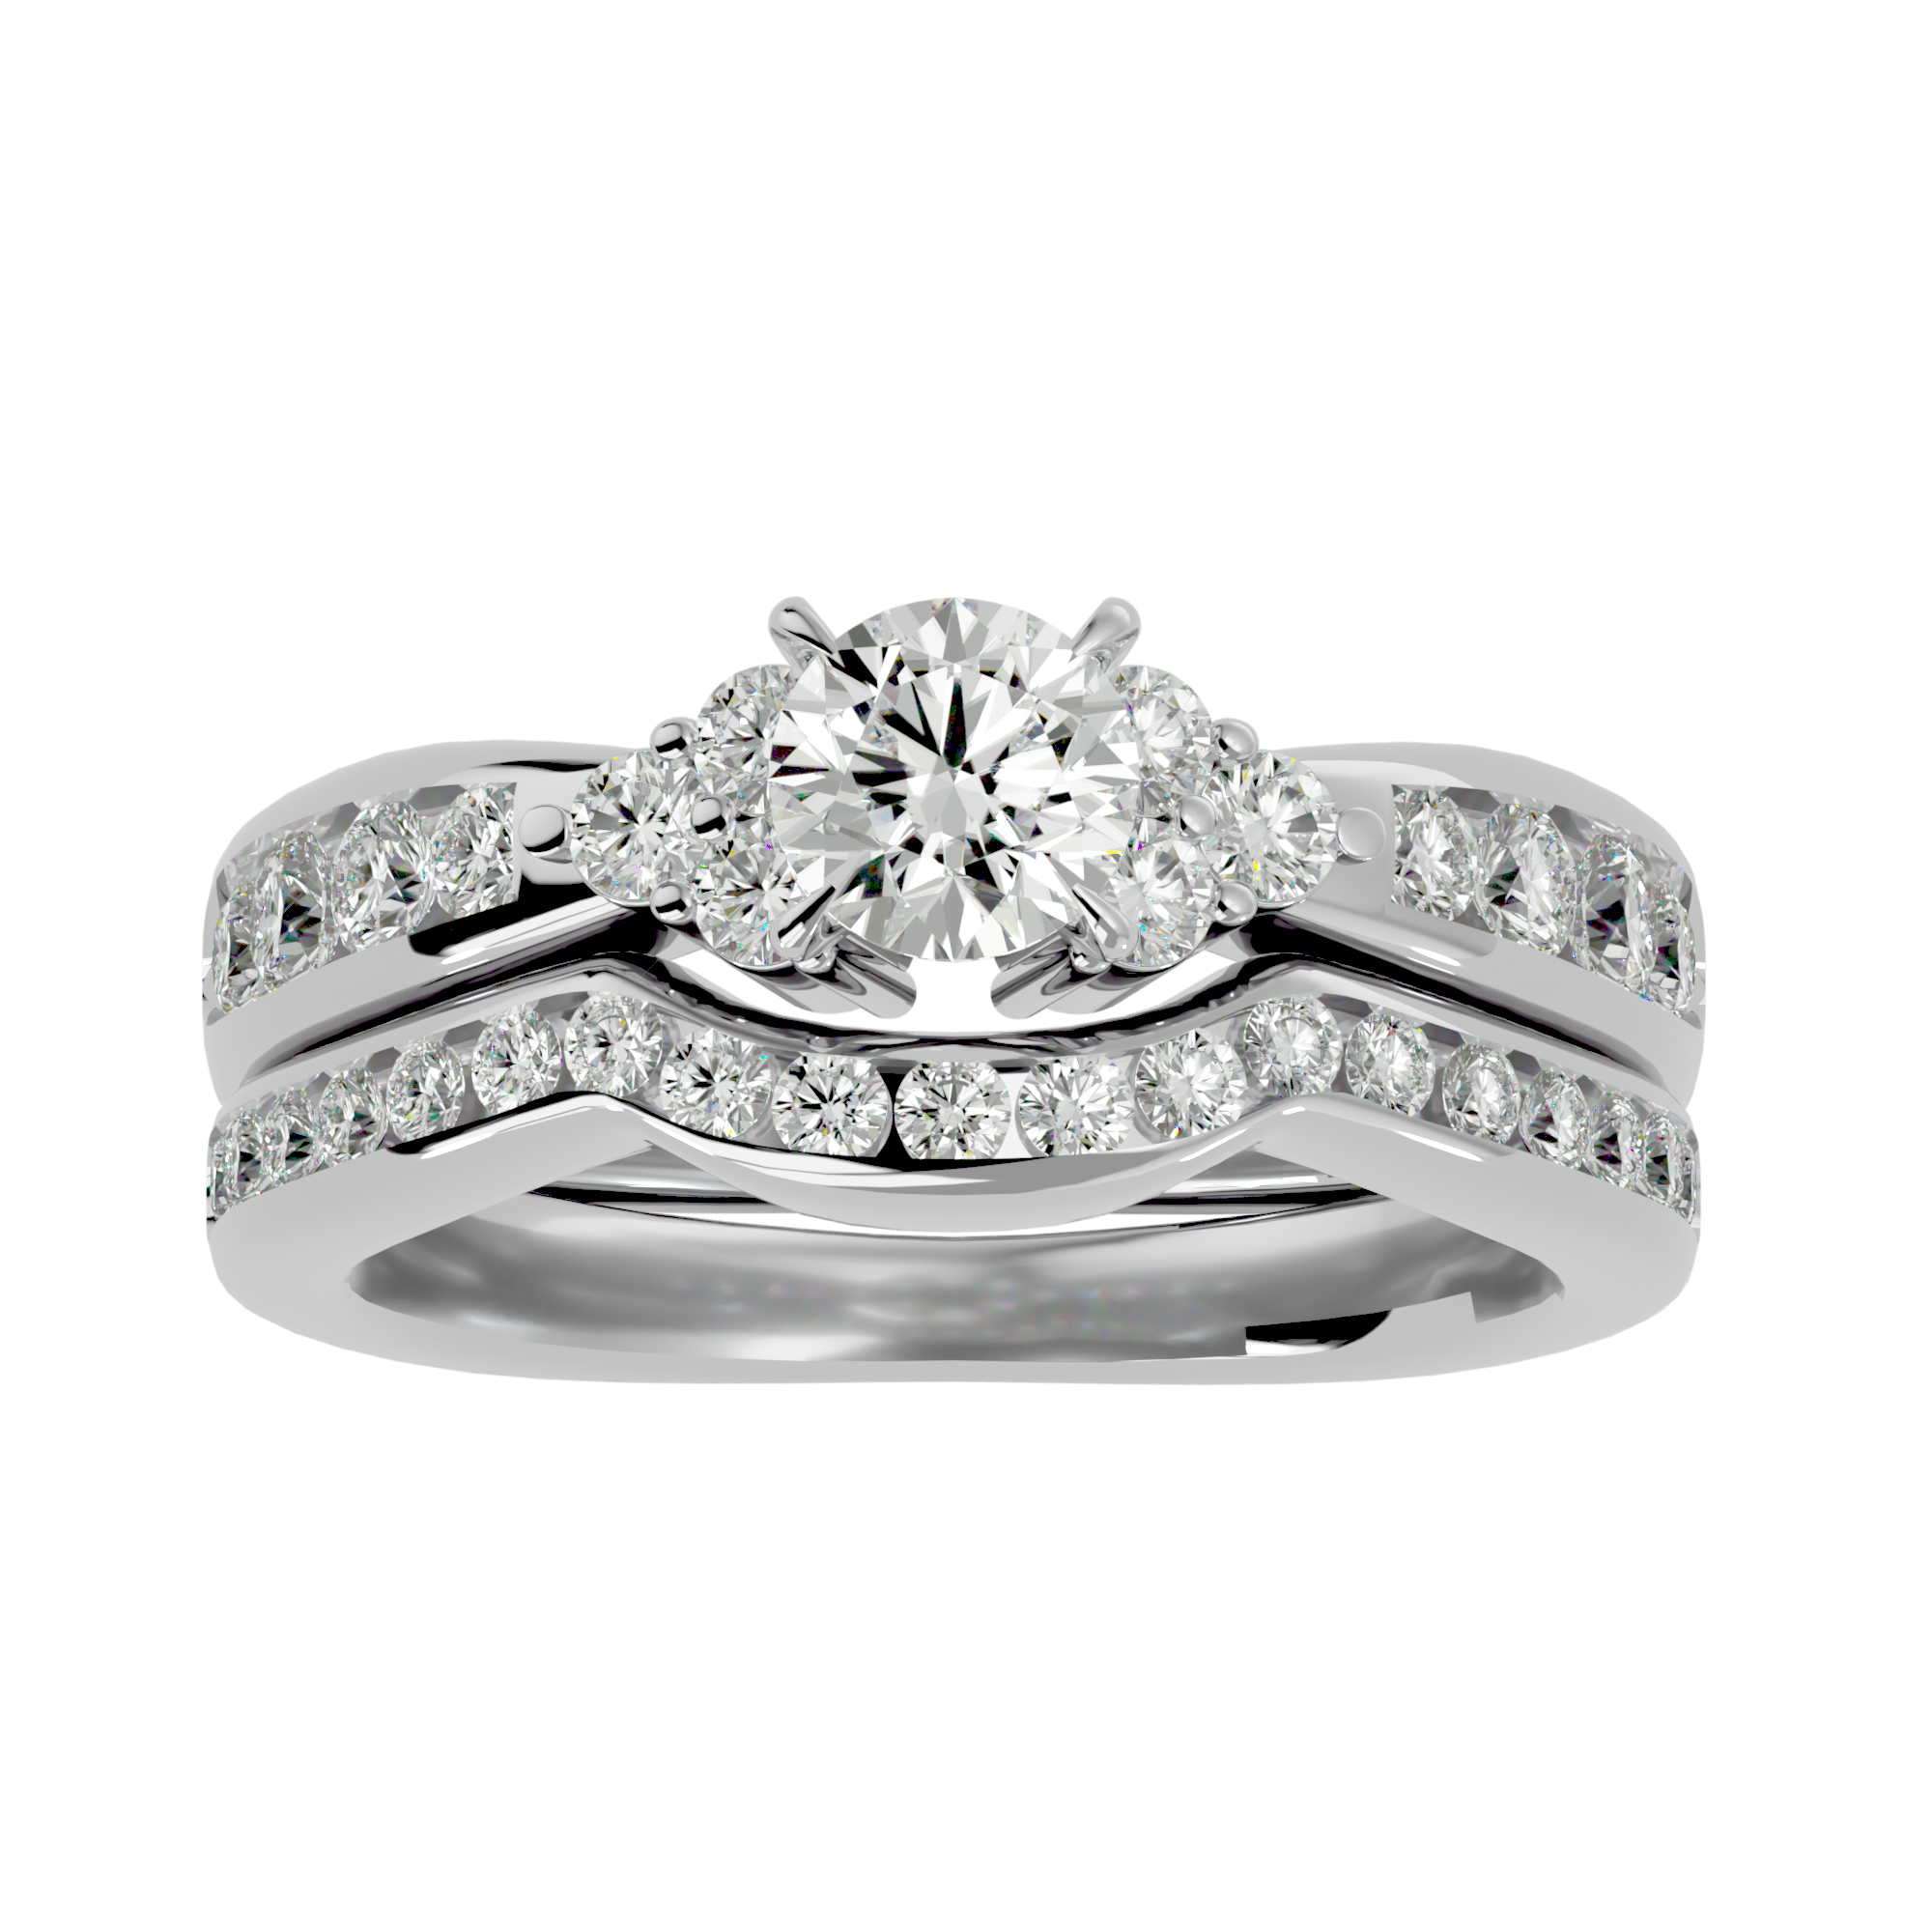 Riley Bridal Ring